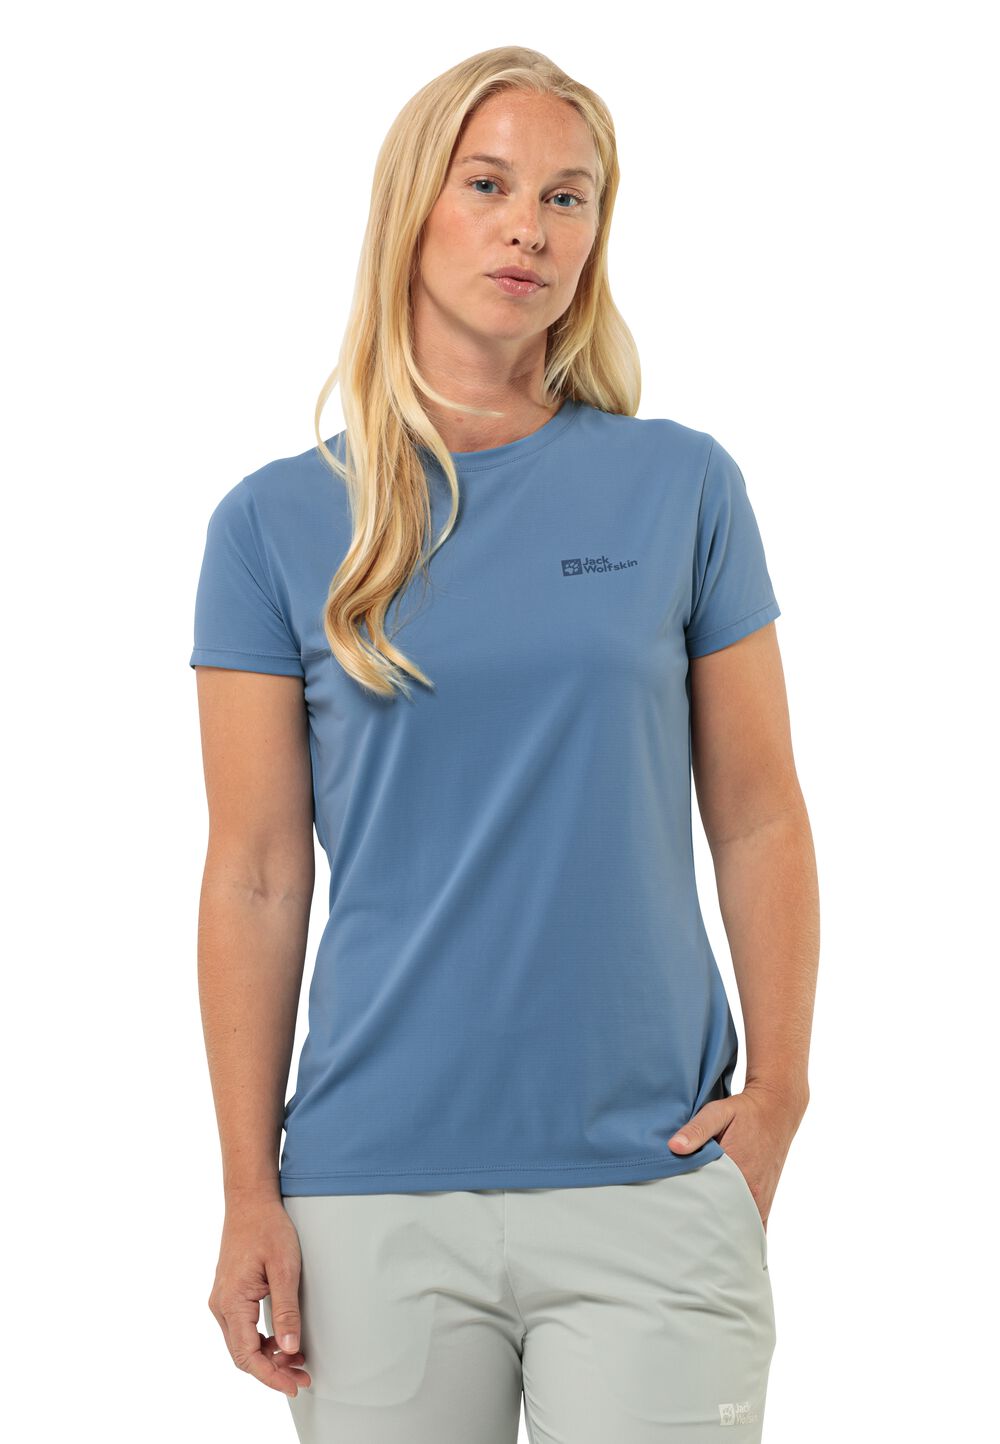 Jack Wolfskin Prelight Trail T-Shirt Women Functioneel shirt Dames XS elemental blue elemental blue